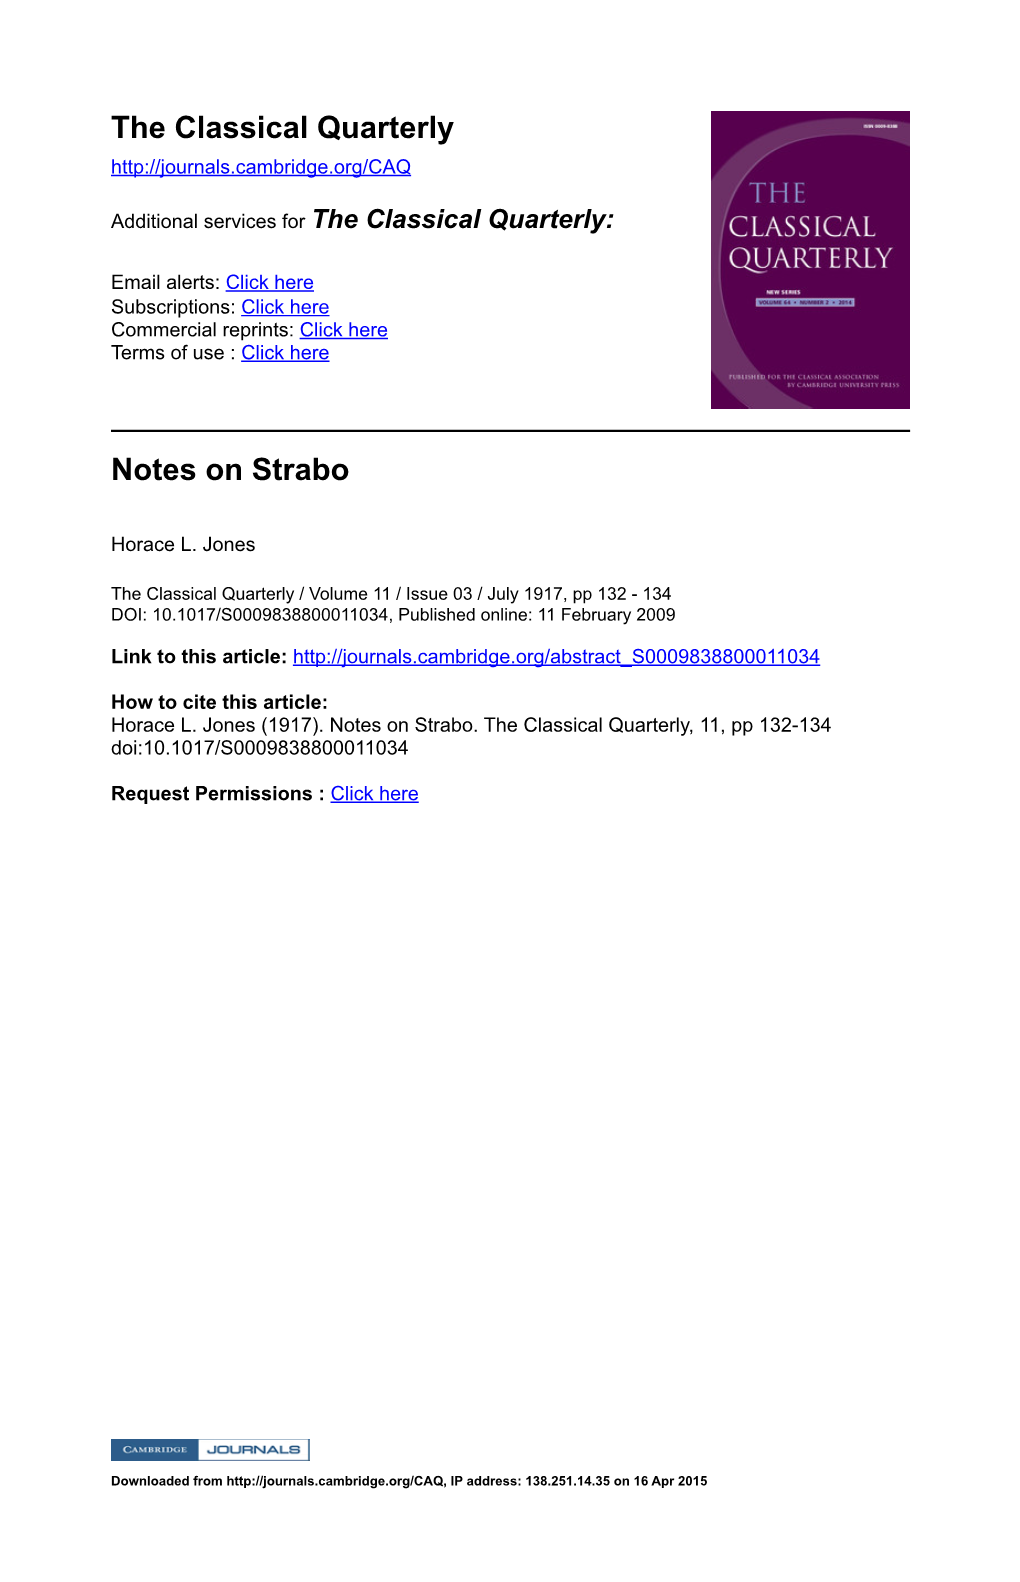 Notes on Strabo